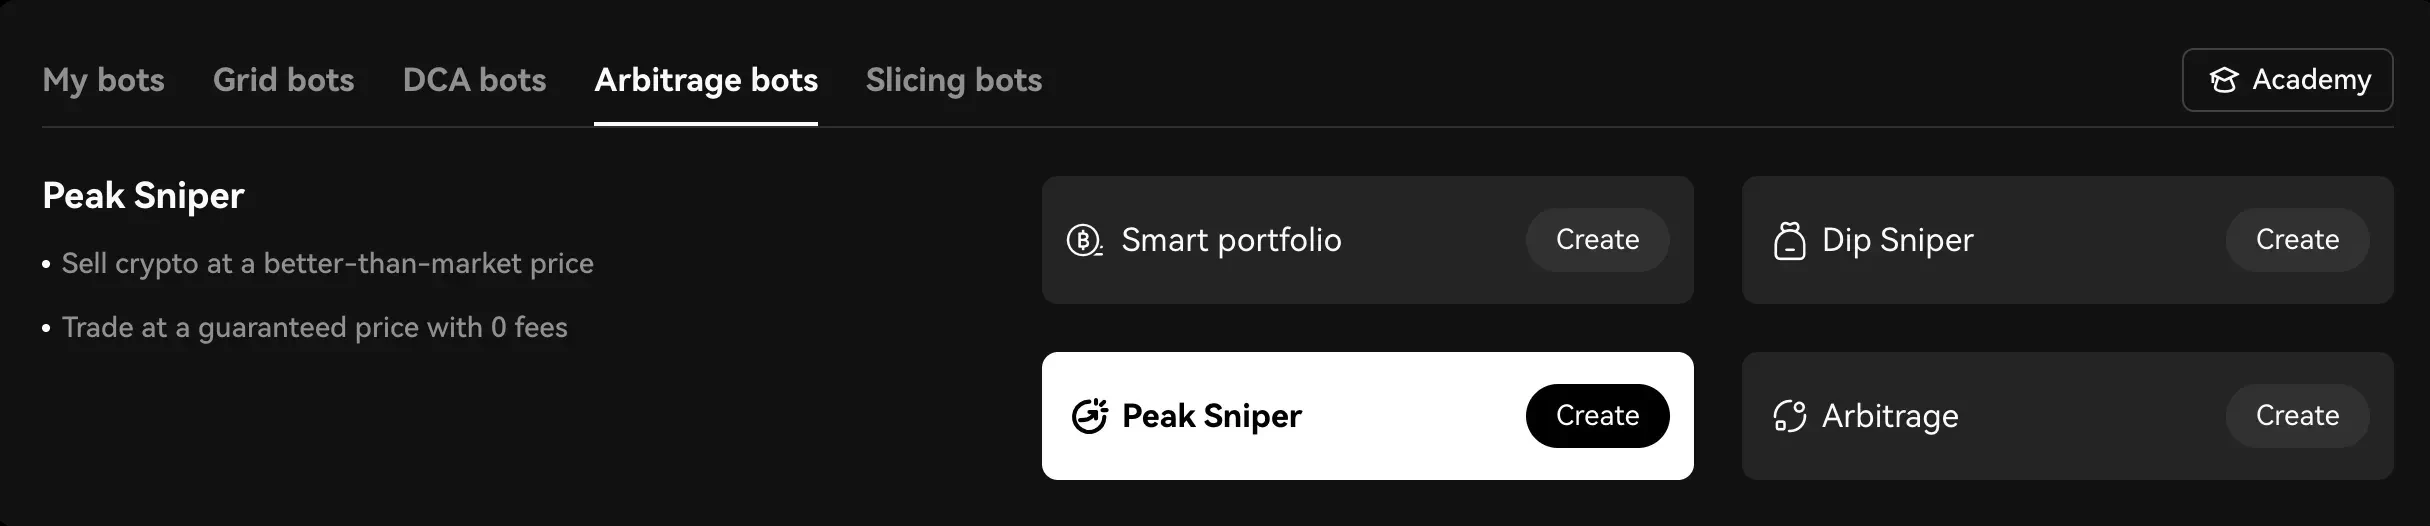 Peak Sniper Bot